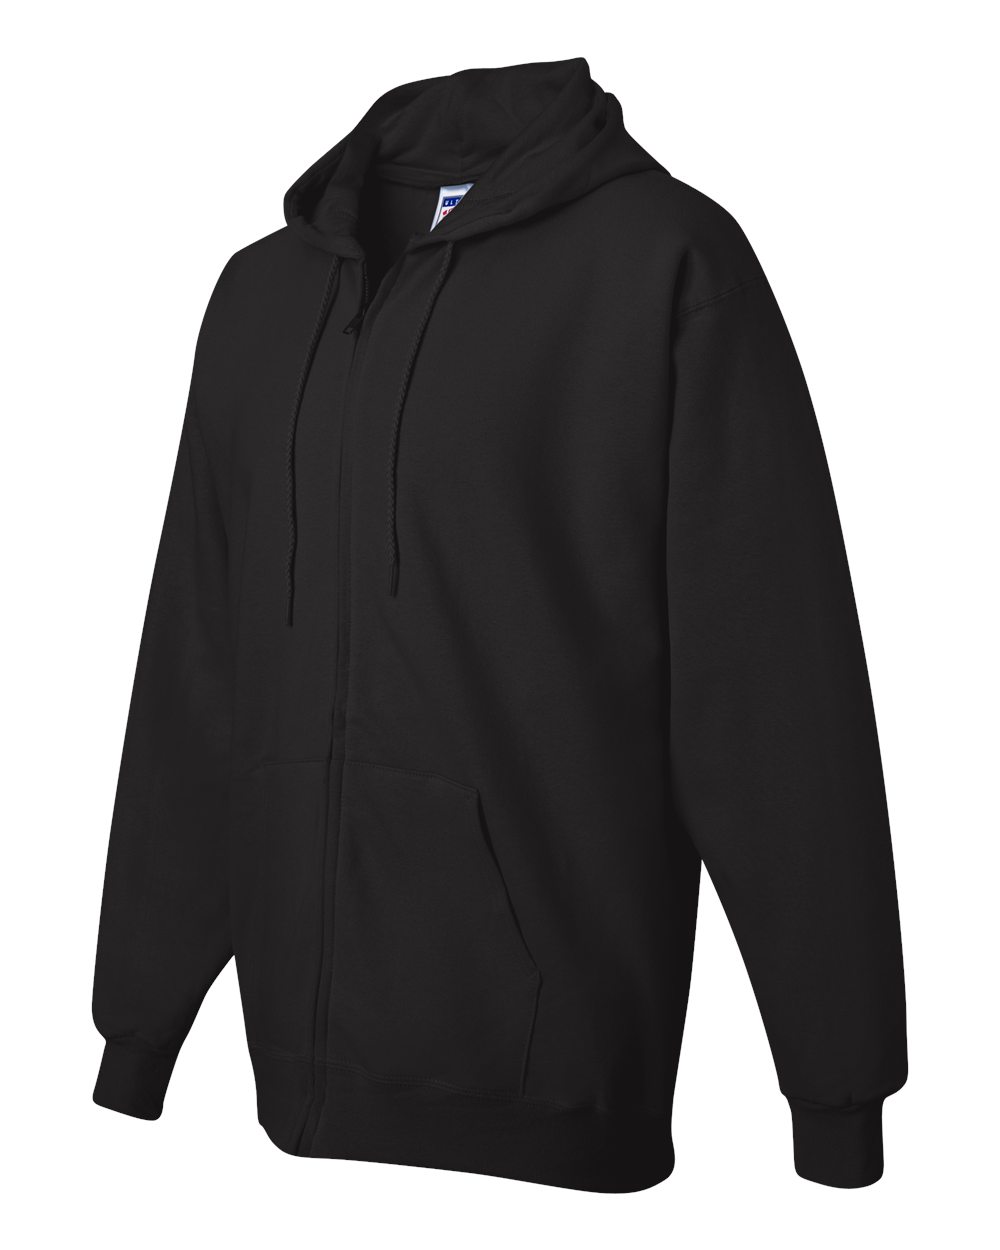 Hanes F280 - PrintProXP Ultimate Cotton Full-Zip Hooded Sweatshirt